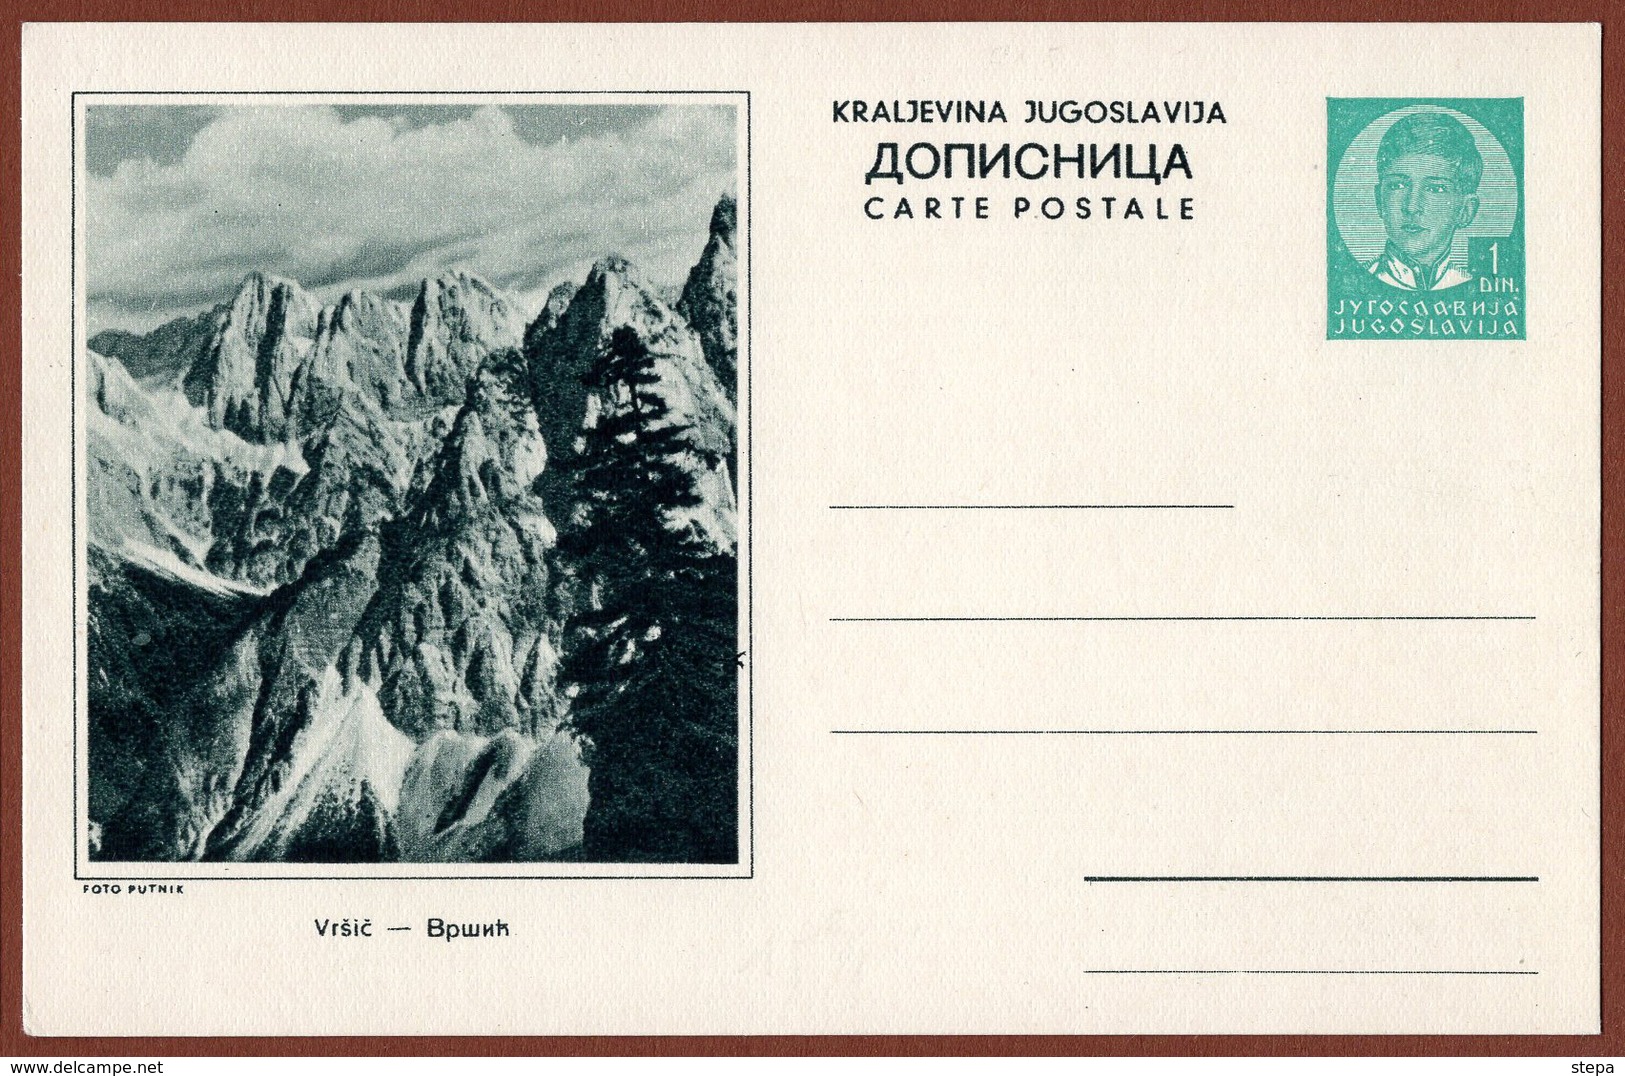 YUGOSLAVIA-SLOVENIA, VRSIC MOUNTAIN, 5th EDITION ILLUSTRATED POSTAL CARD - Entiers Postaux